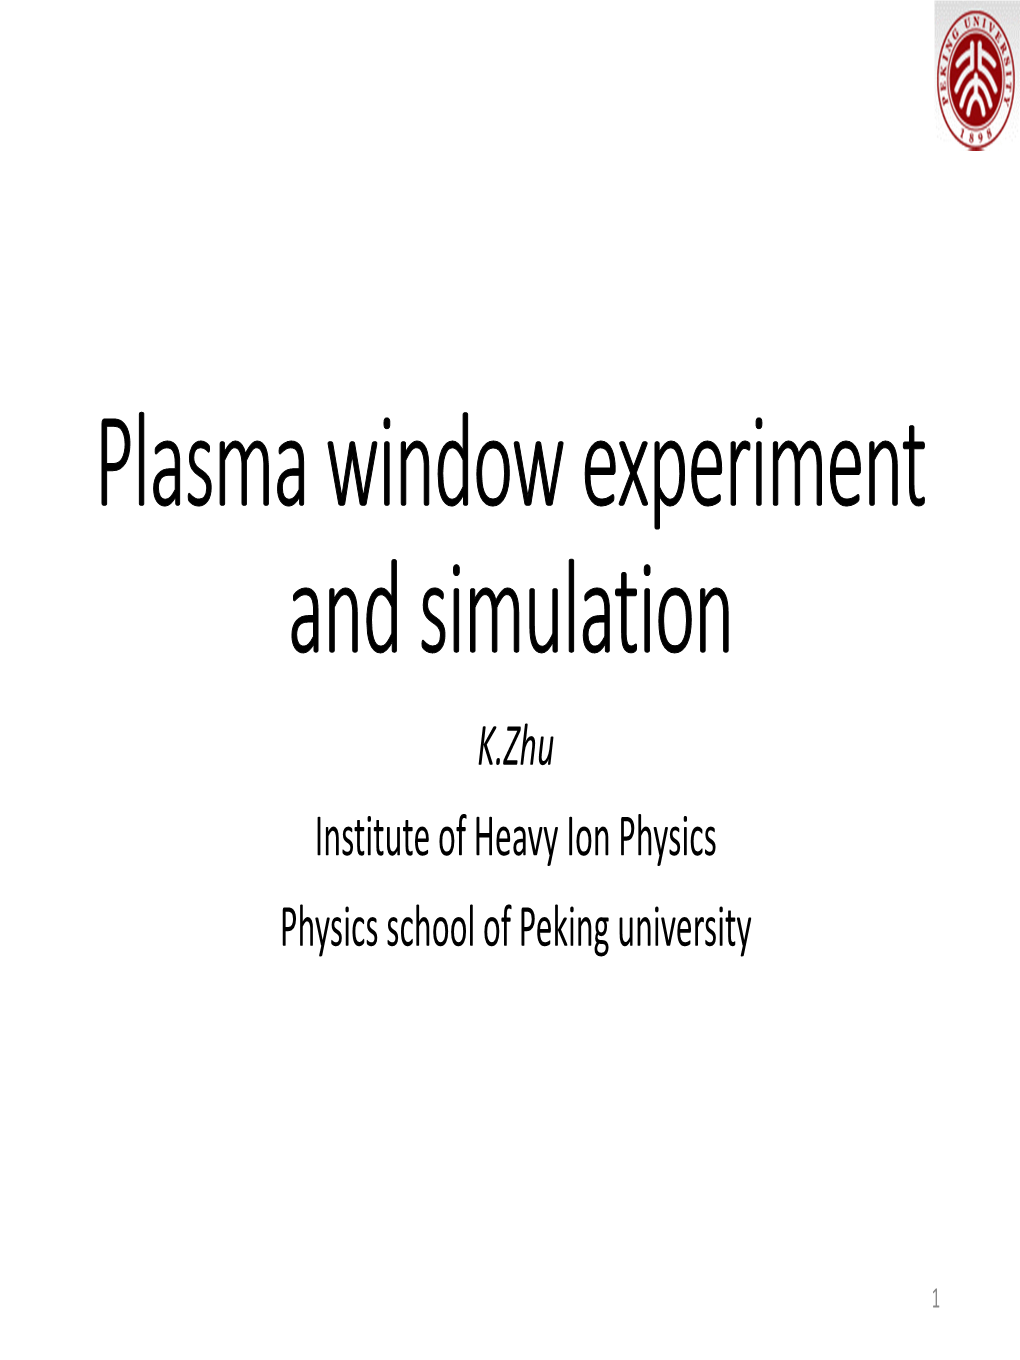 Plasma Window Experiment and Simulation K.Zhu Institute of Heavy Ion Physics Physics School of Peking University